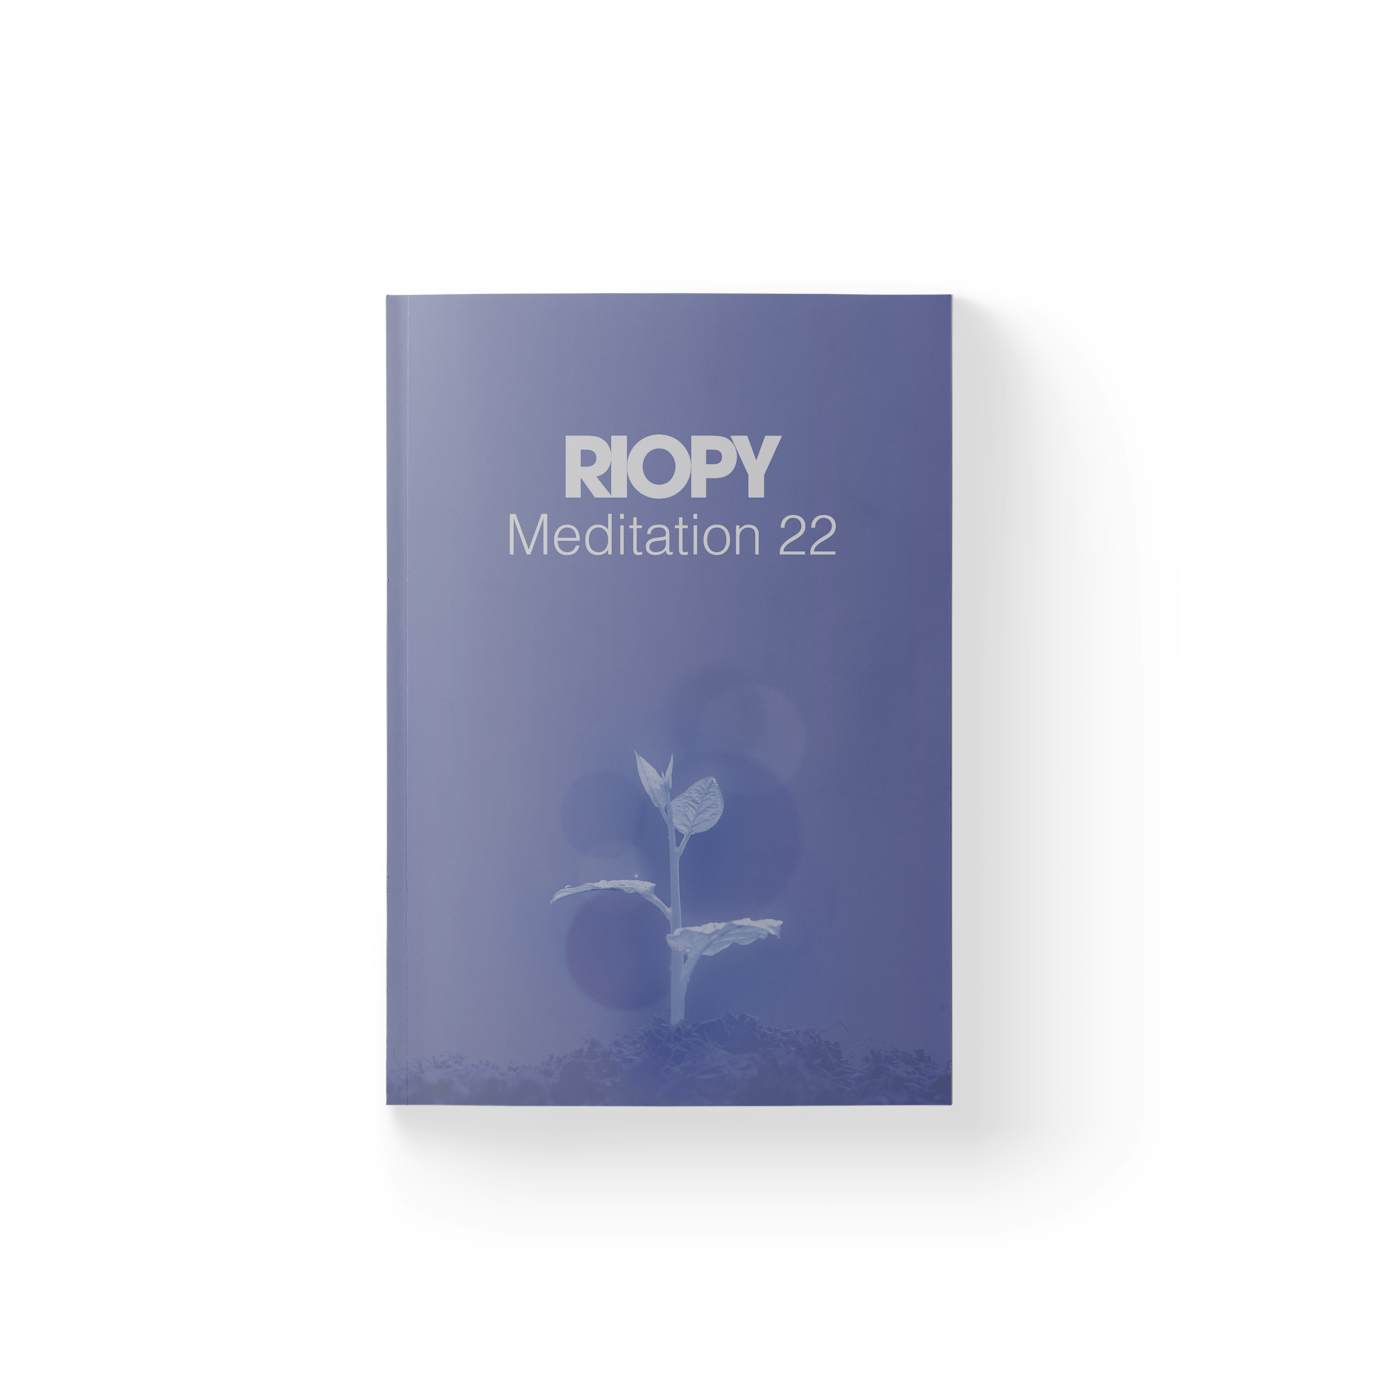 RIOPY Meditation 22 Sheet Music Book